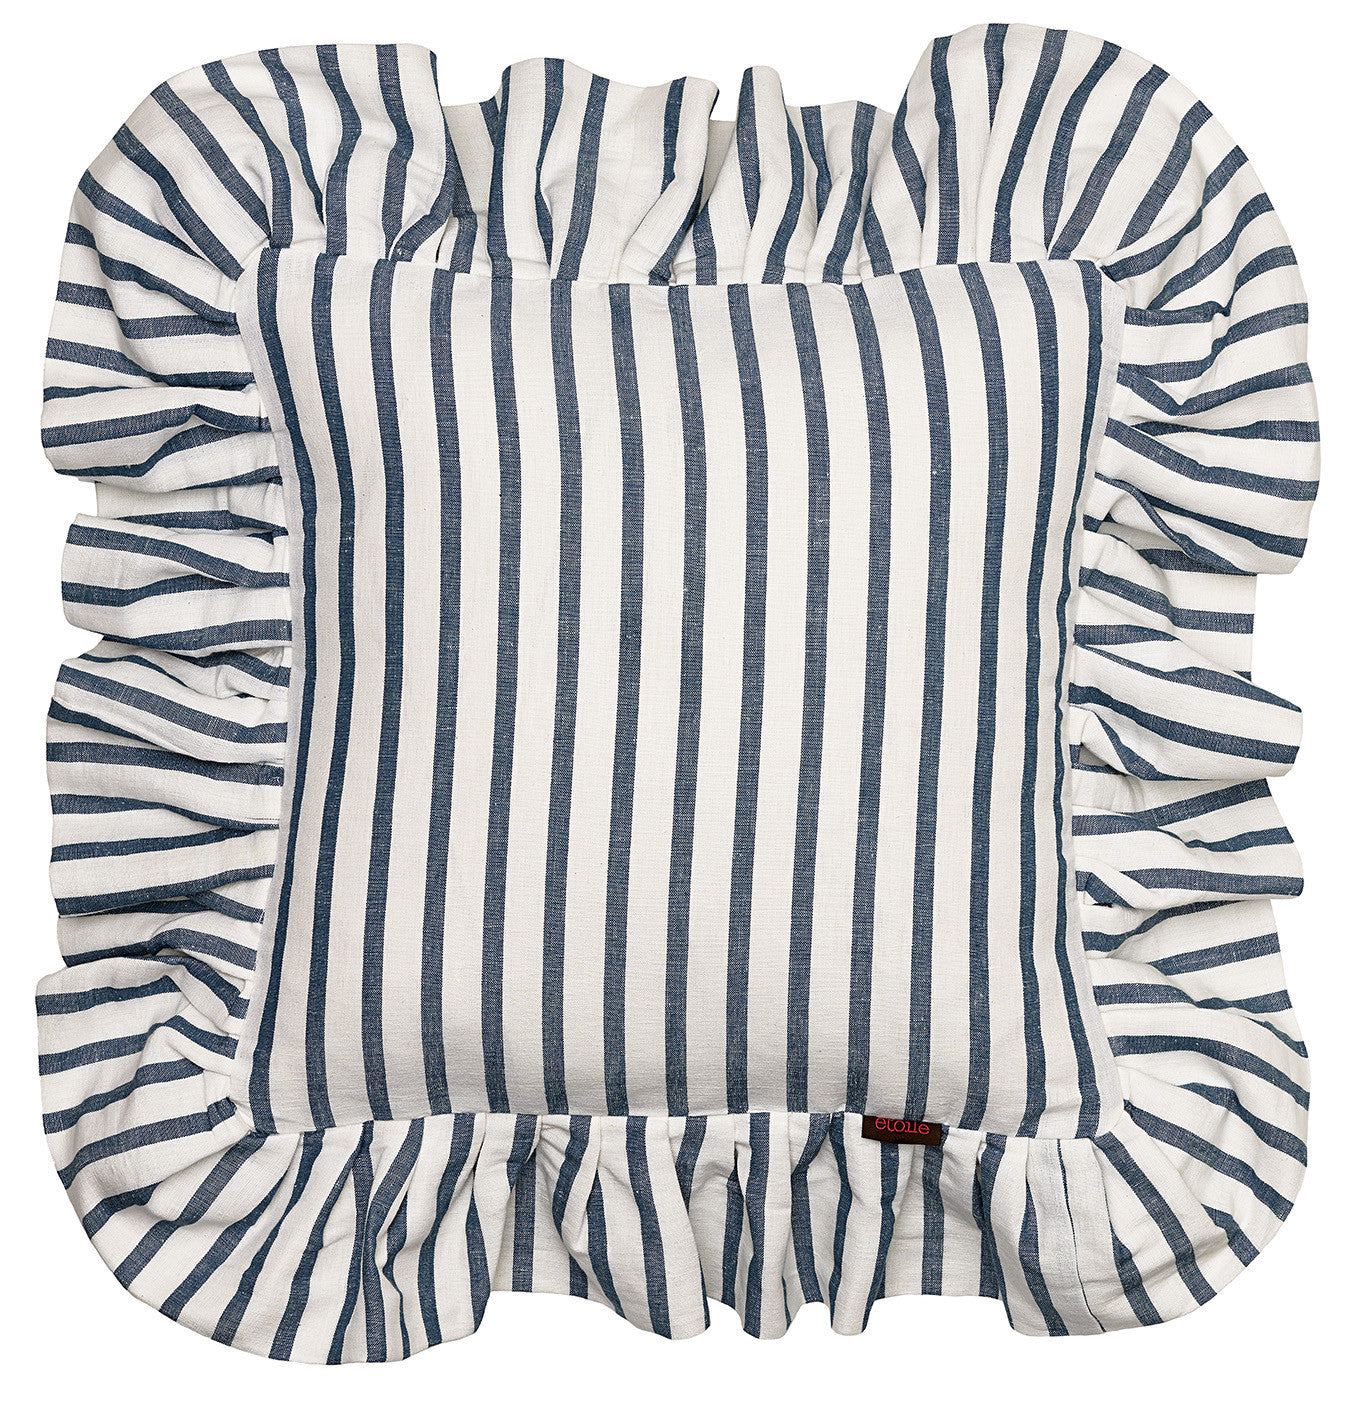 Autumn Ticking Stripe Cotton Linen Ruffle Decorative Throw Pillow - Petrol Blue 18x18" 45x45cm